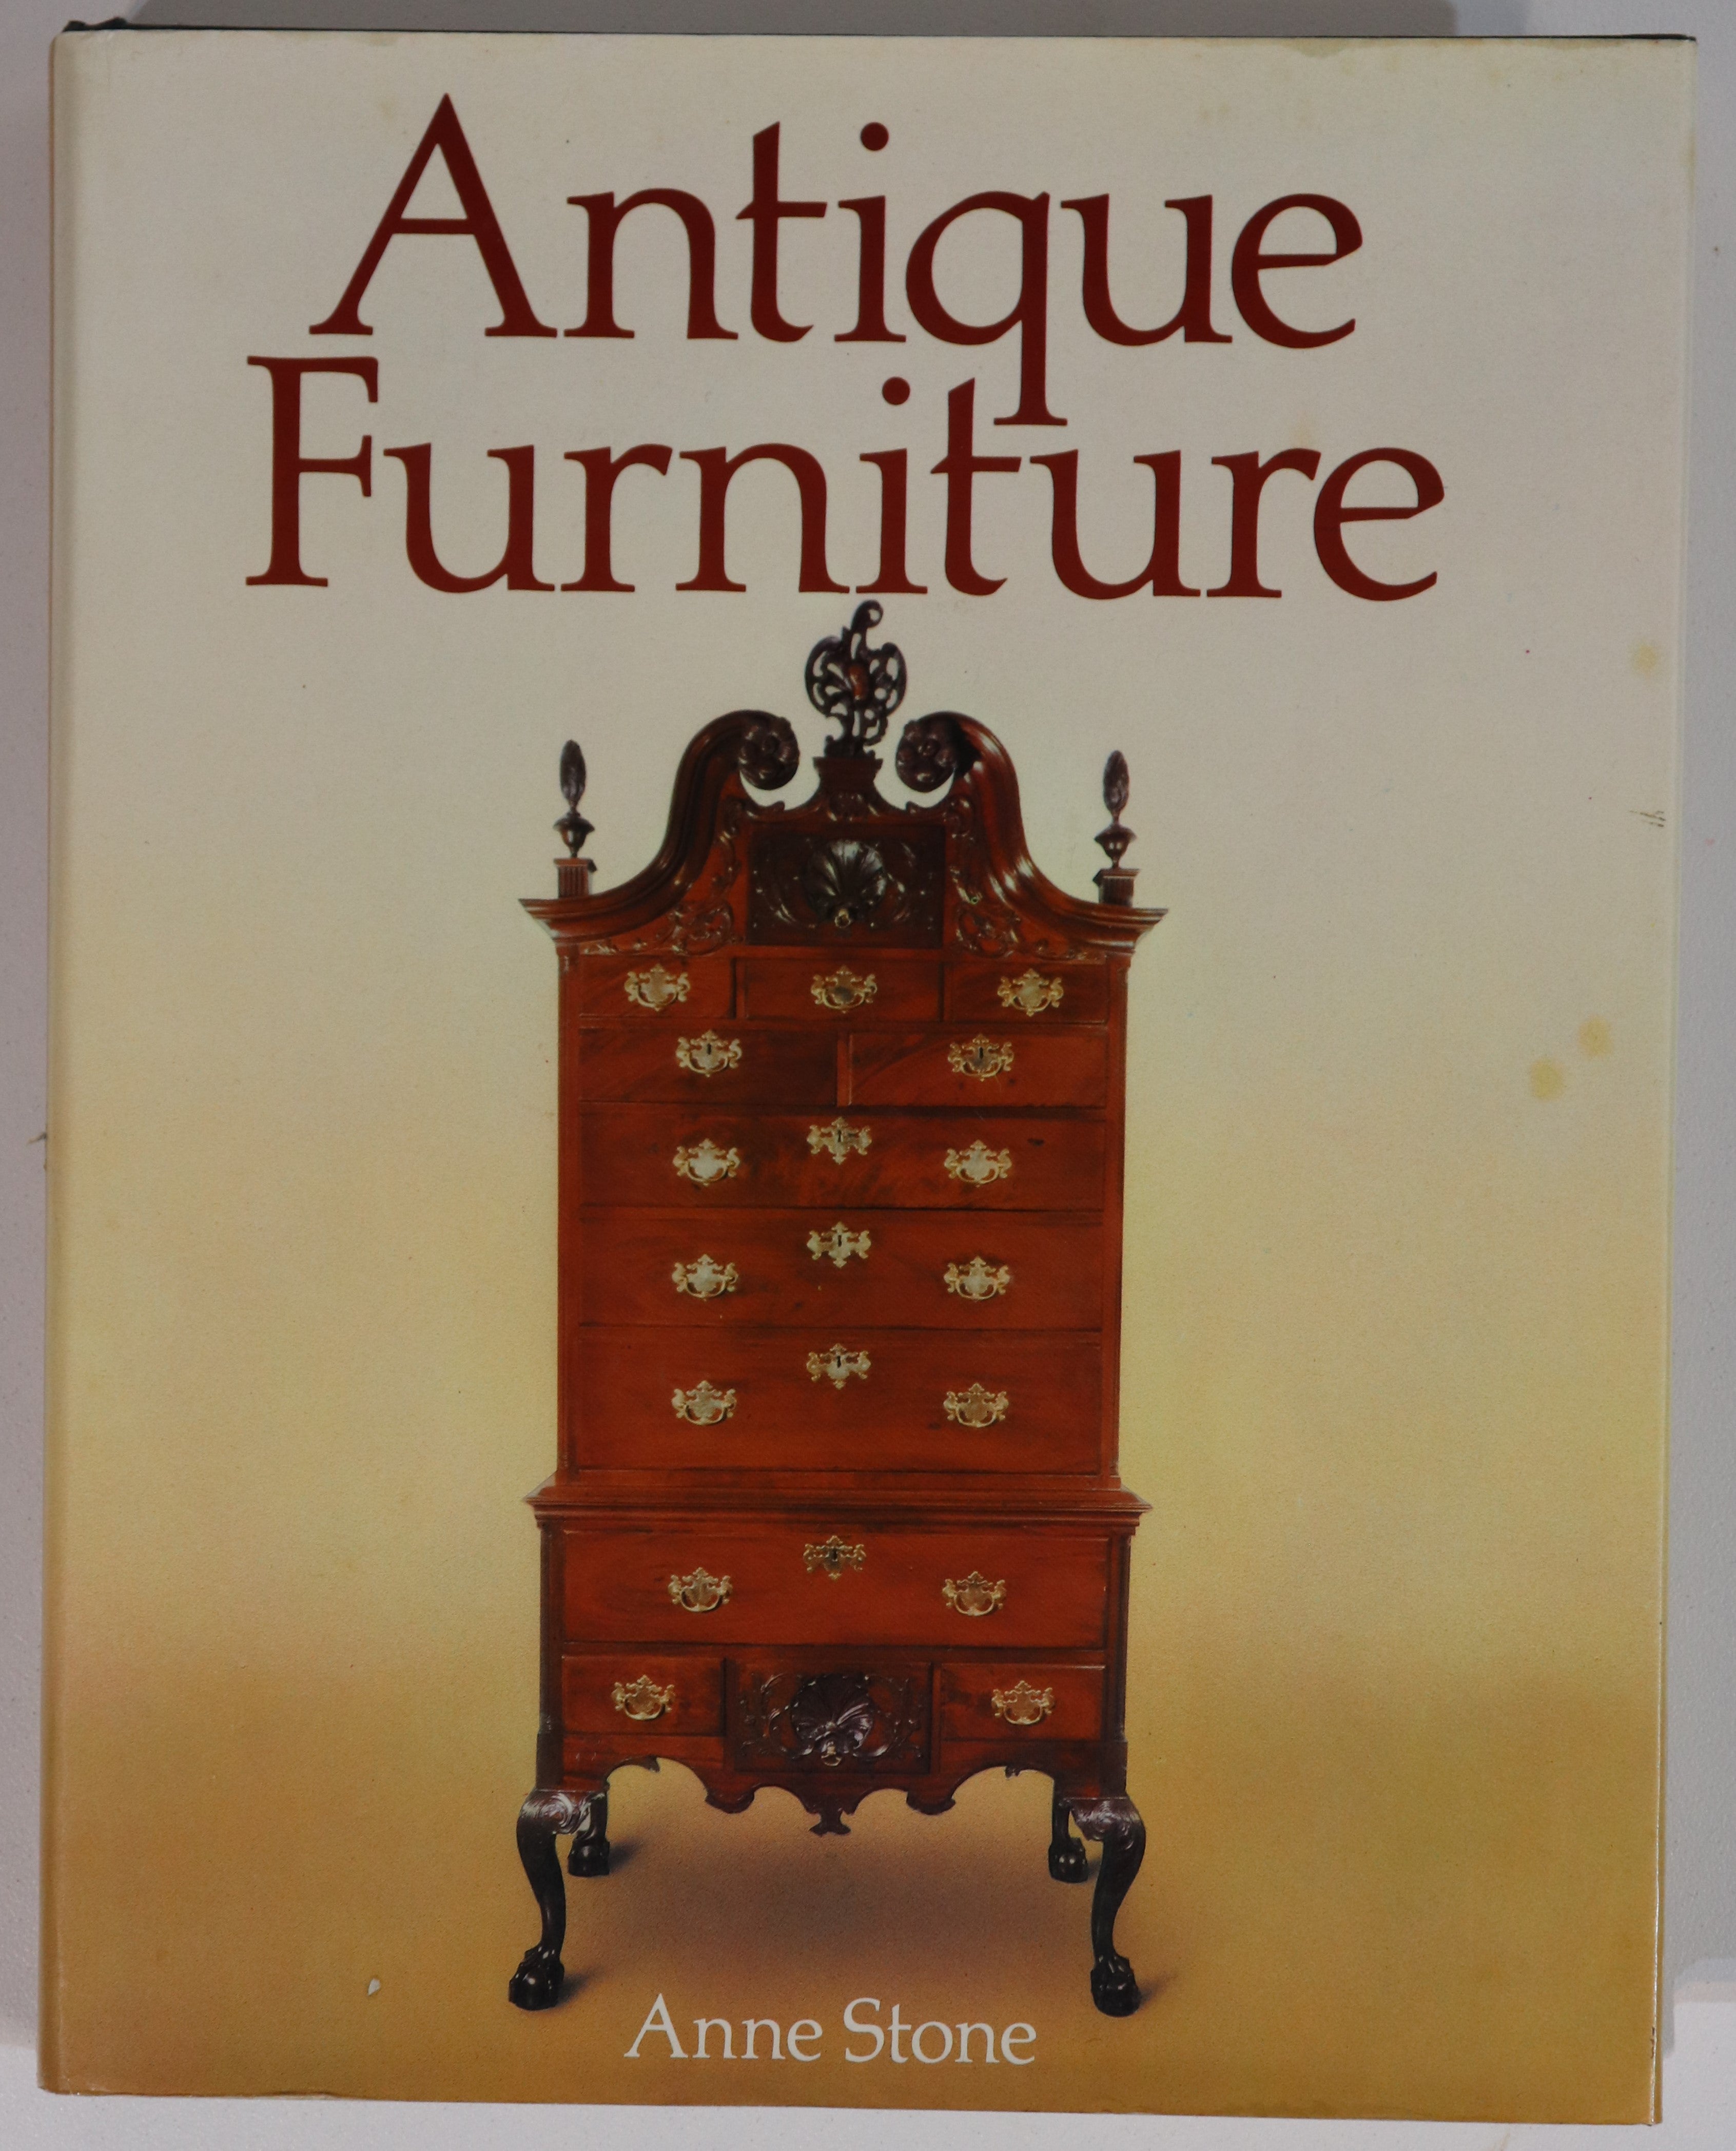 Antique Furniture: Baroque, Rococo, Neoclassical - 1982 - Antique Furniture Book